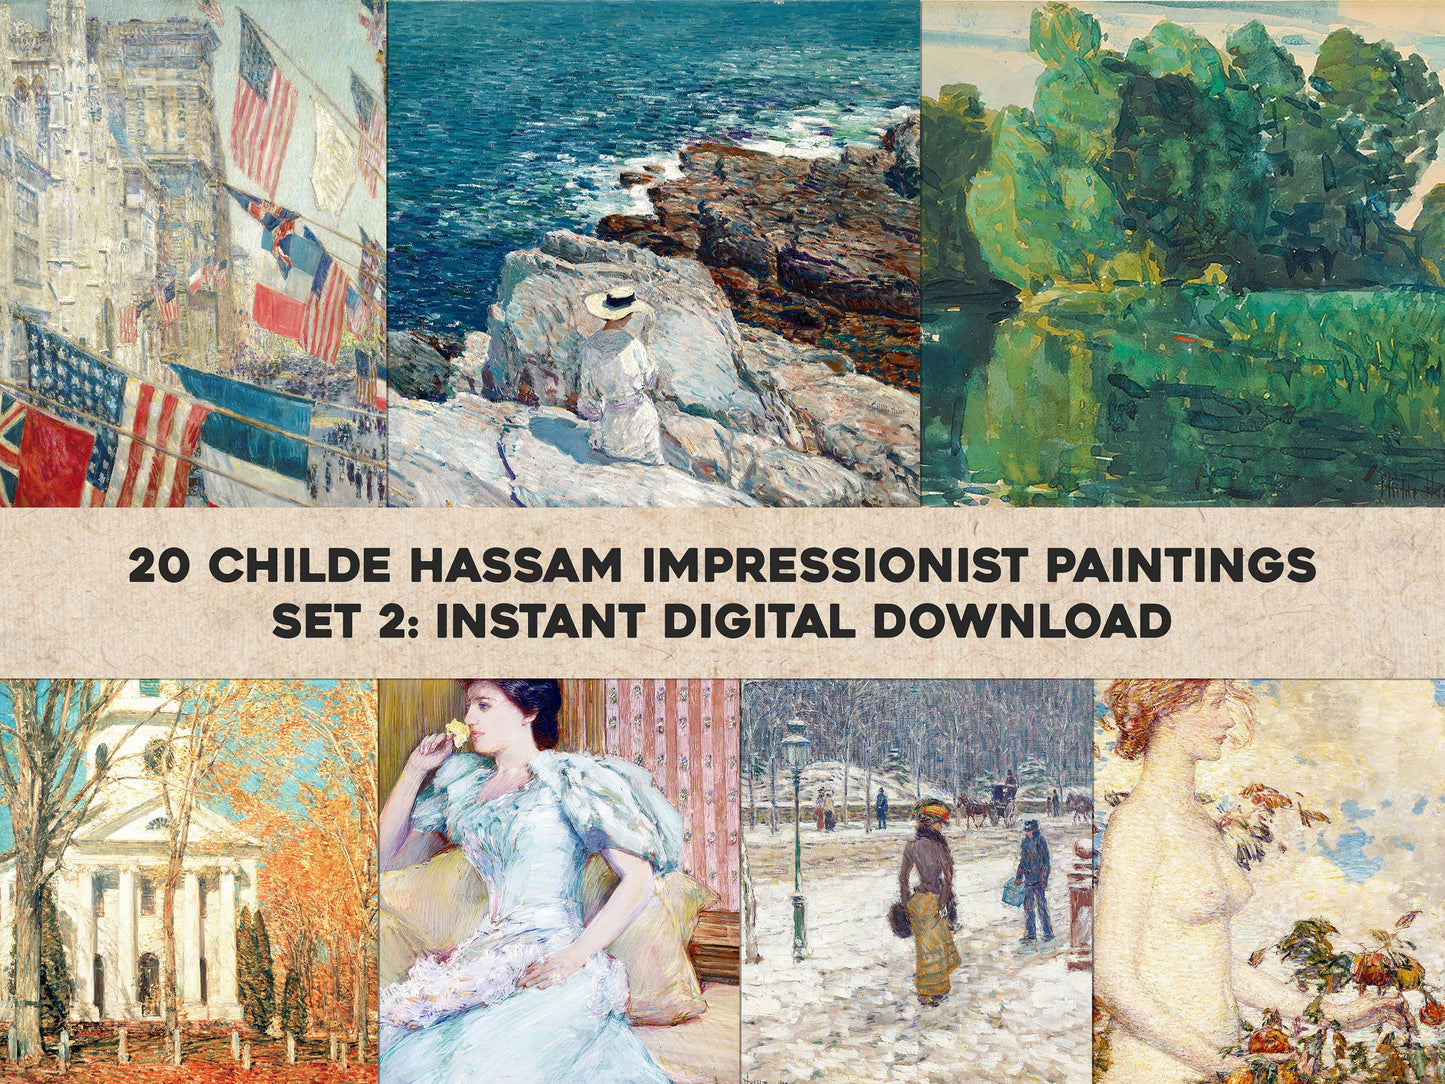 Childe Hassam Impressionist Paintings Set 2 [20 Images]